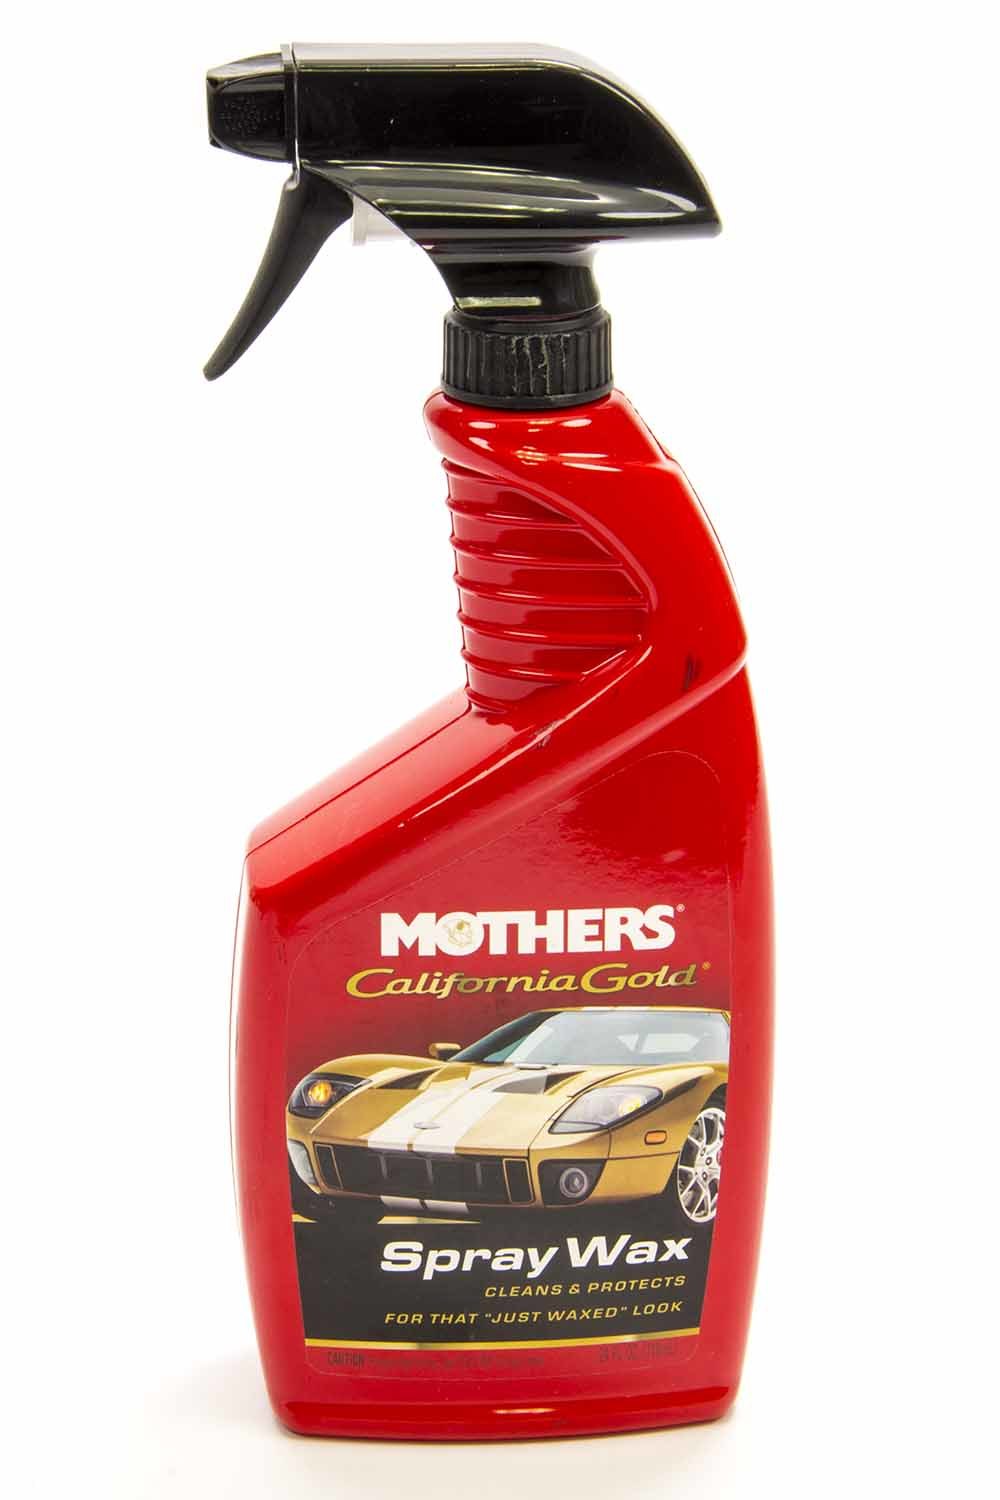 MOTHERS Spray Wax, California Gold, 24 oz Spray Bottle, Each